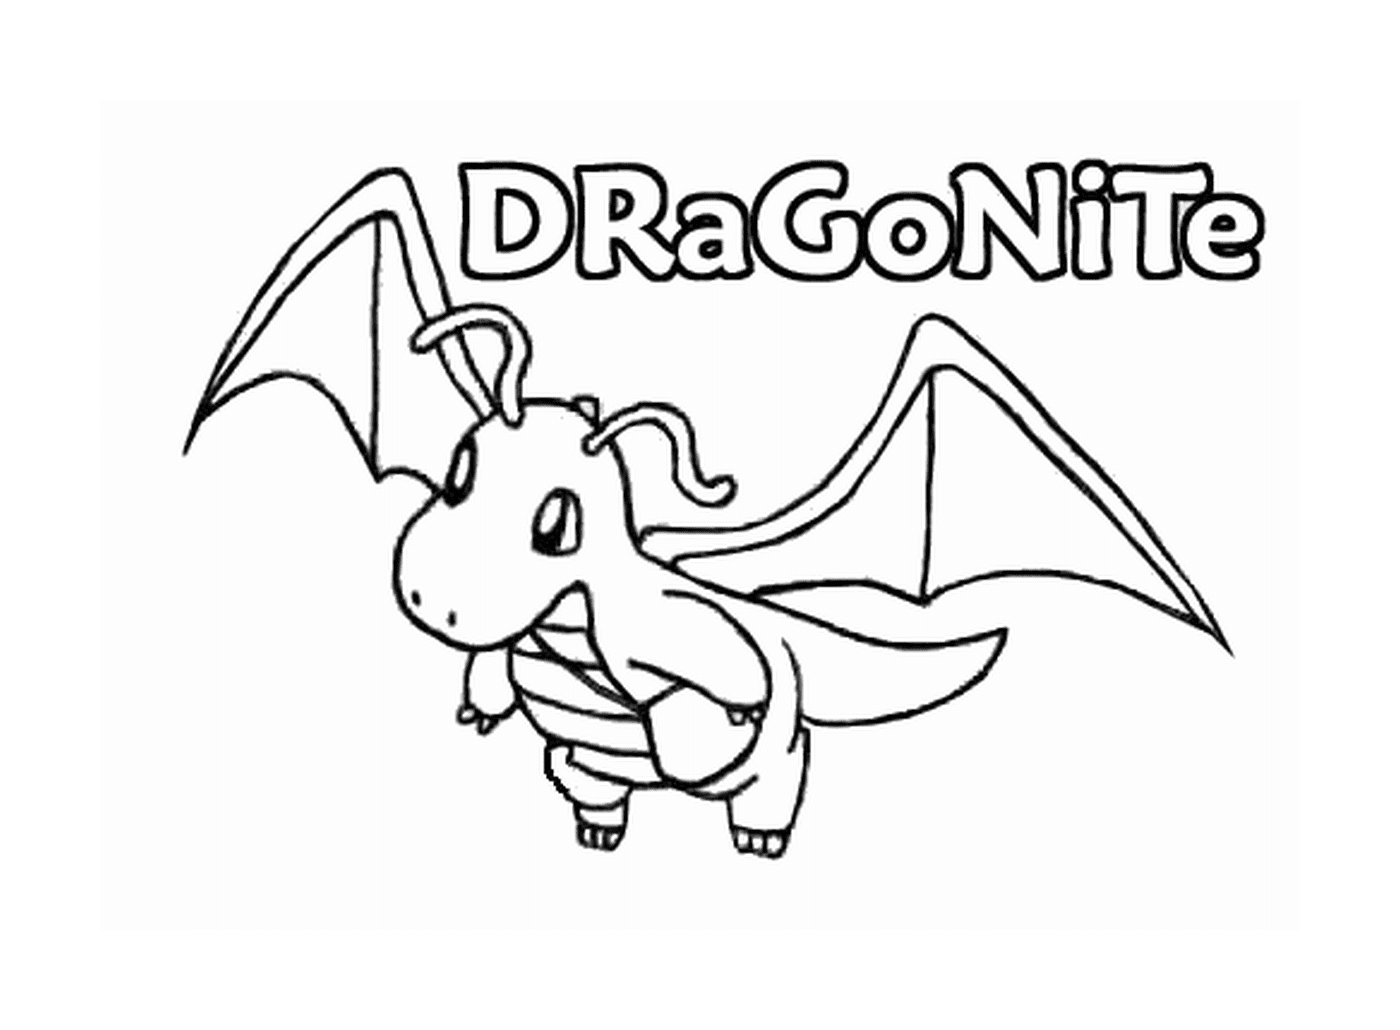  Dragonite: Powerful Flying Dragon 